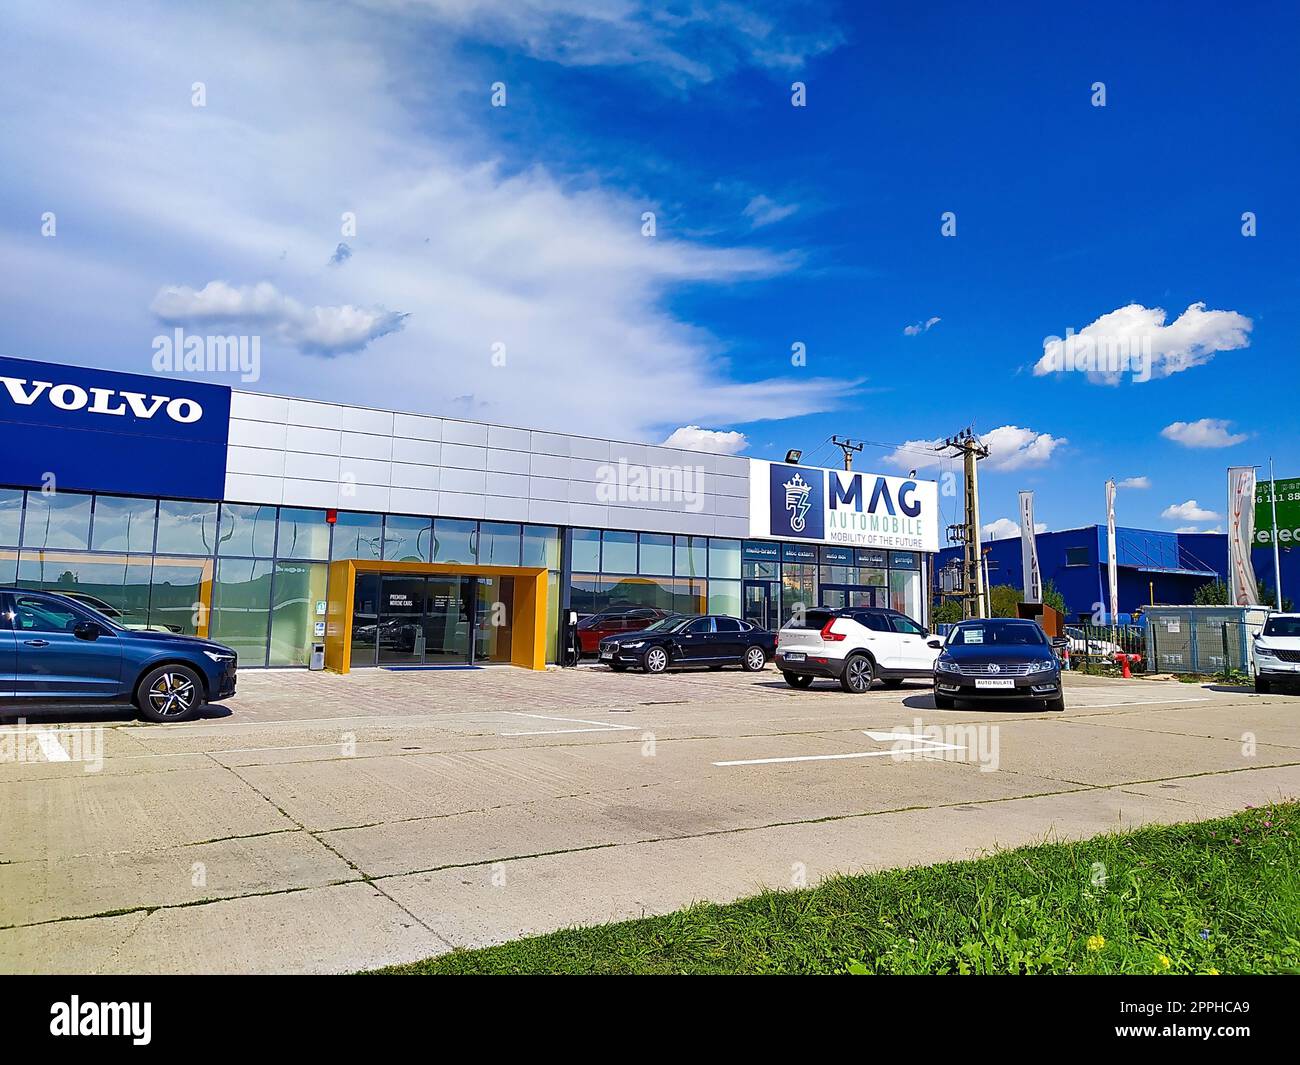 Iasi, Romania - September 11, 2022: Exterior view of Volvo dealership Stock Photo